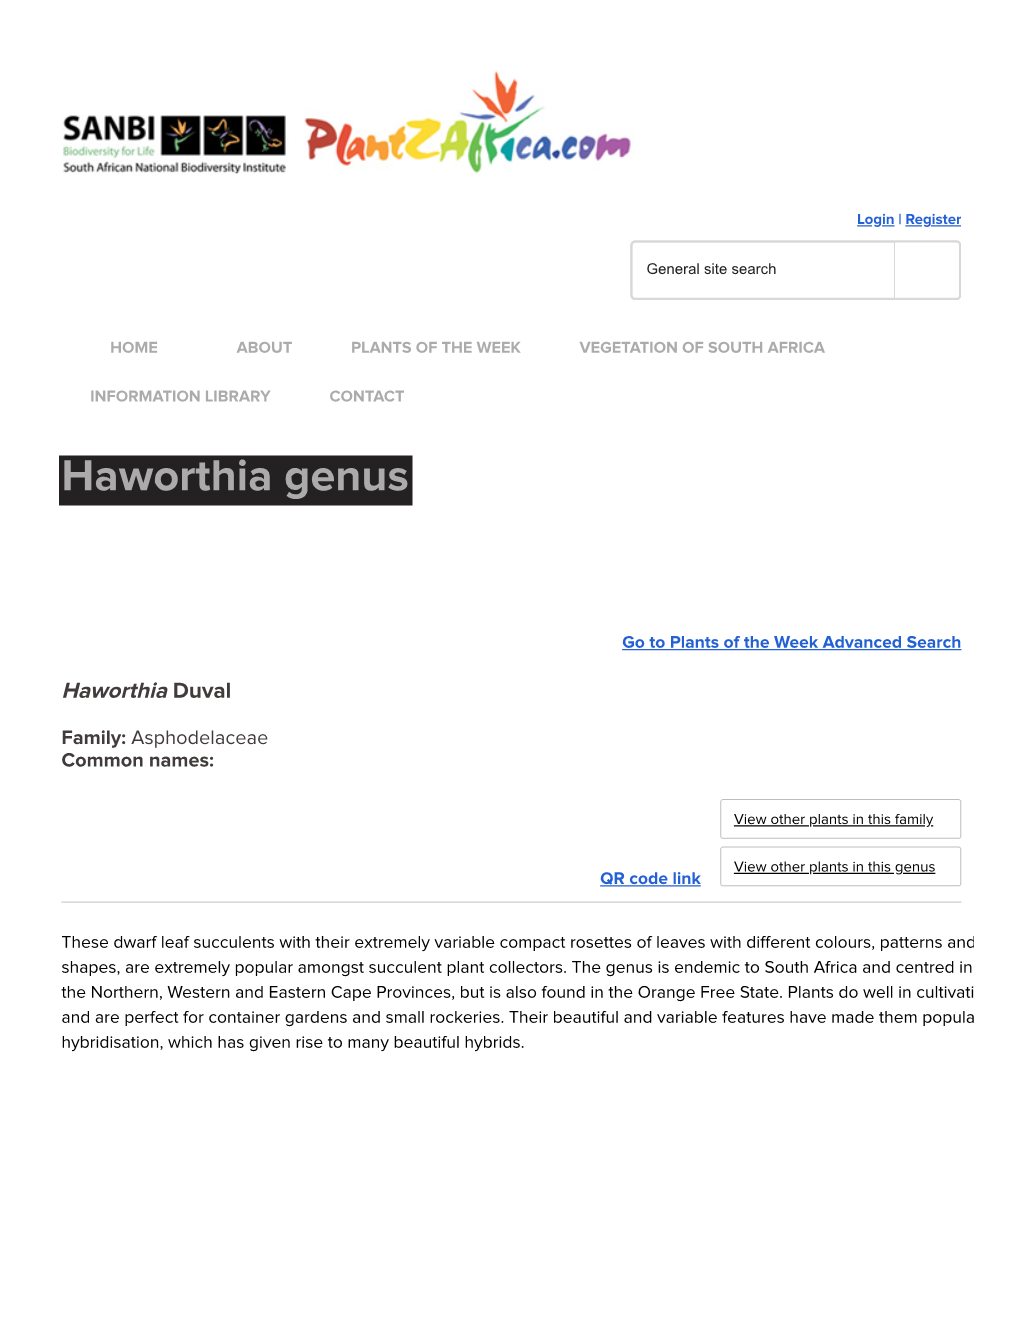 Haworthia Genus